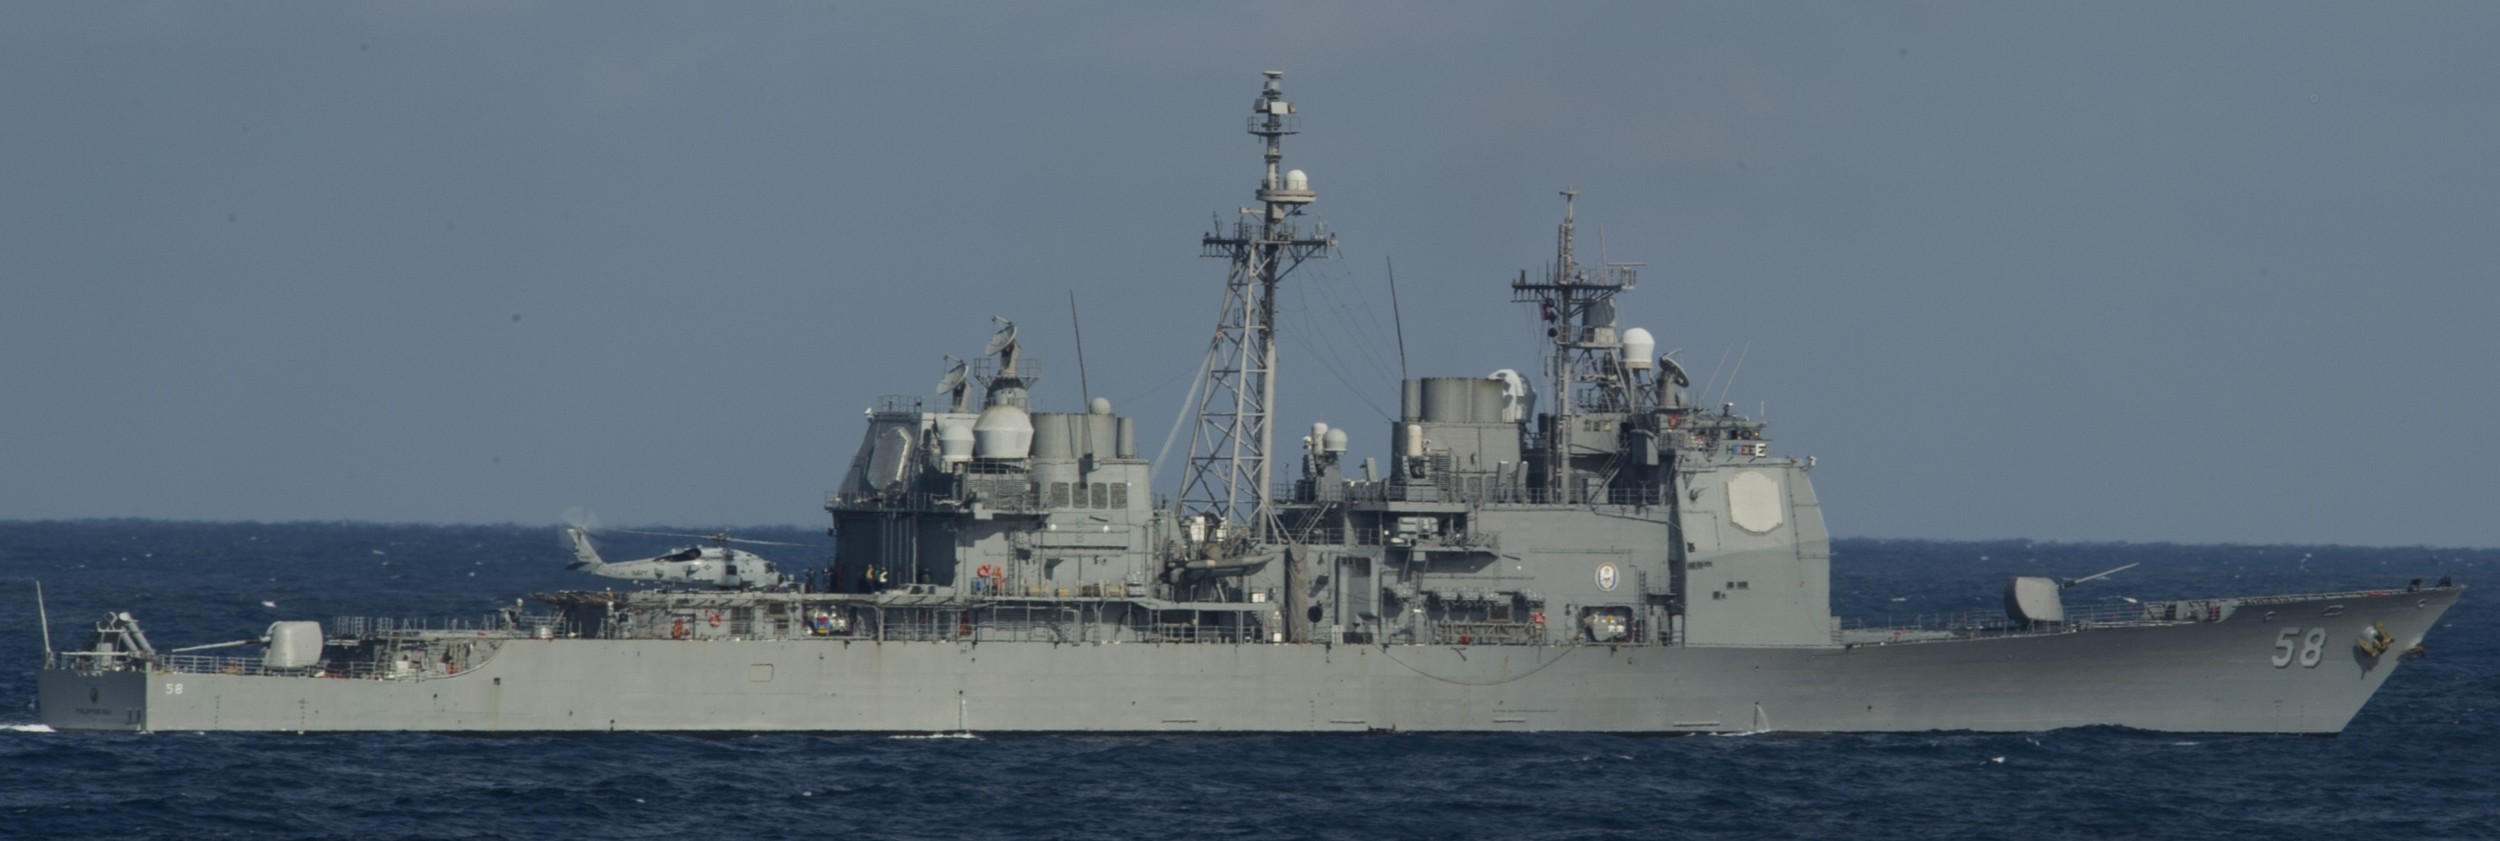 cg-58 uss philippine sea ticonderoga class guided missile cruiser aegis us navy 35